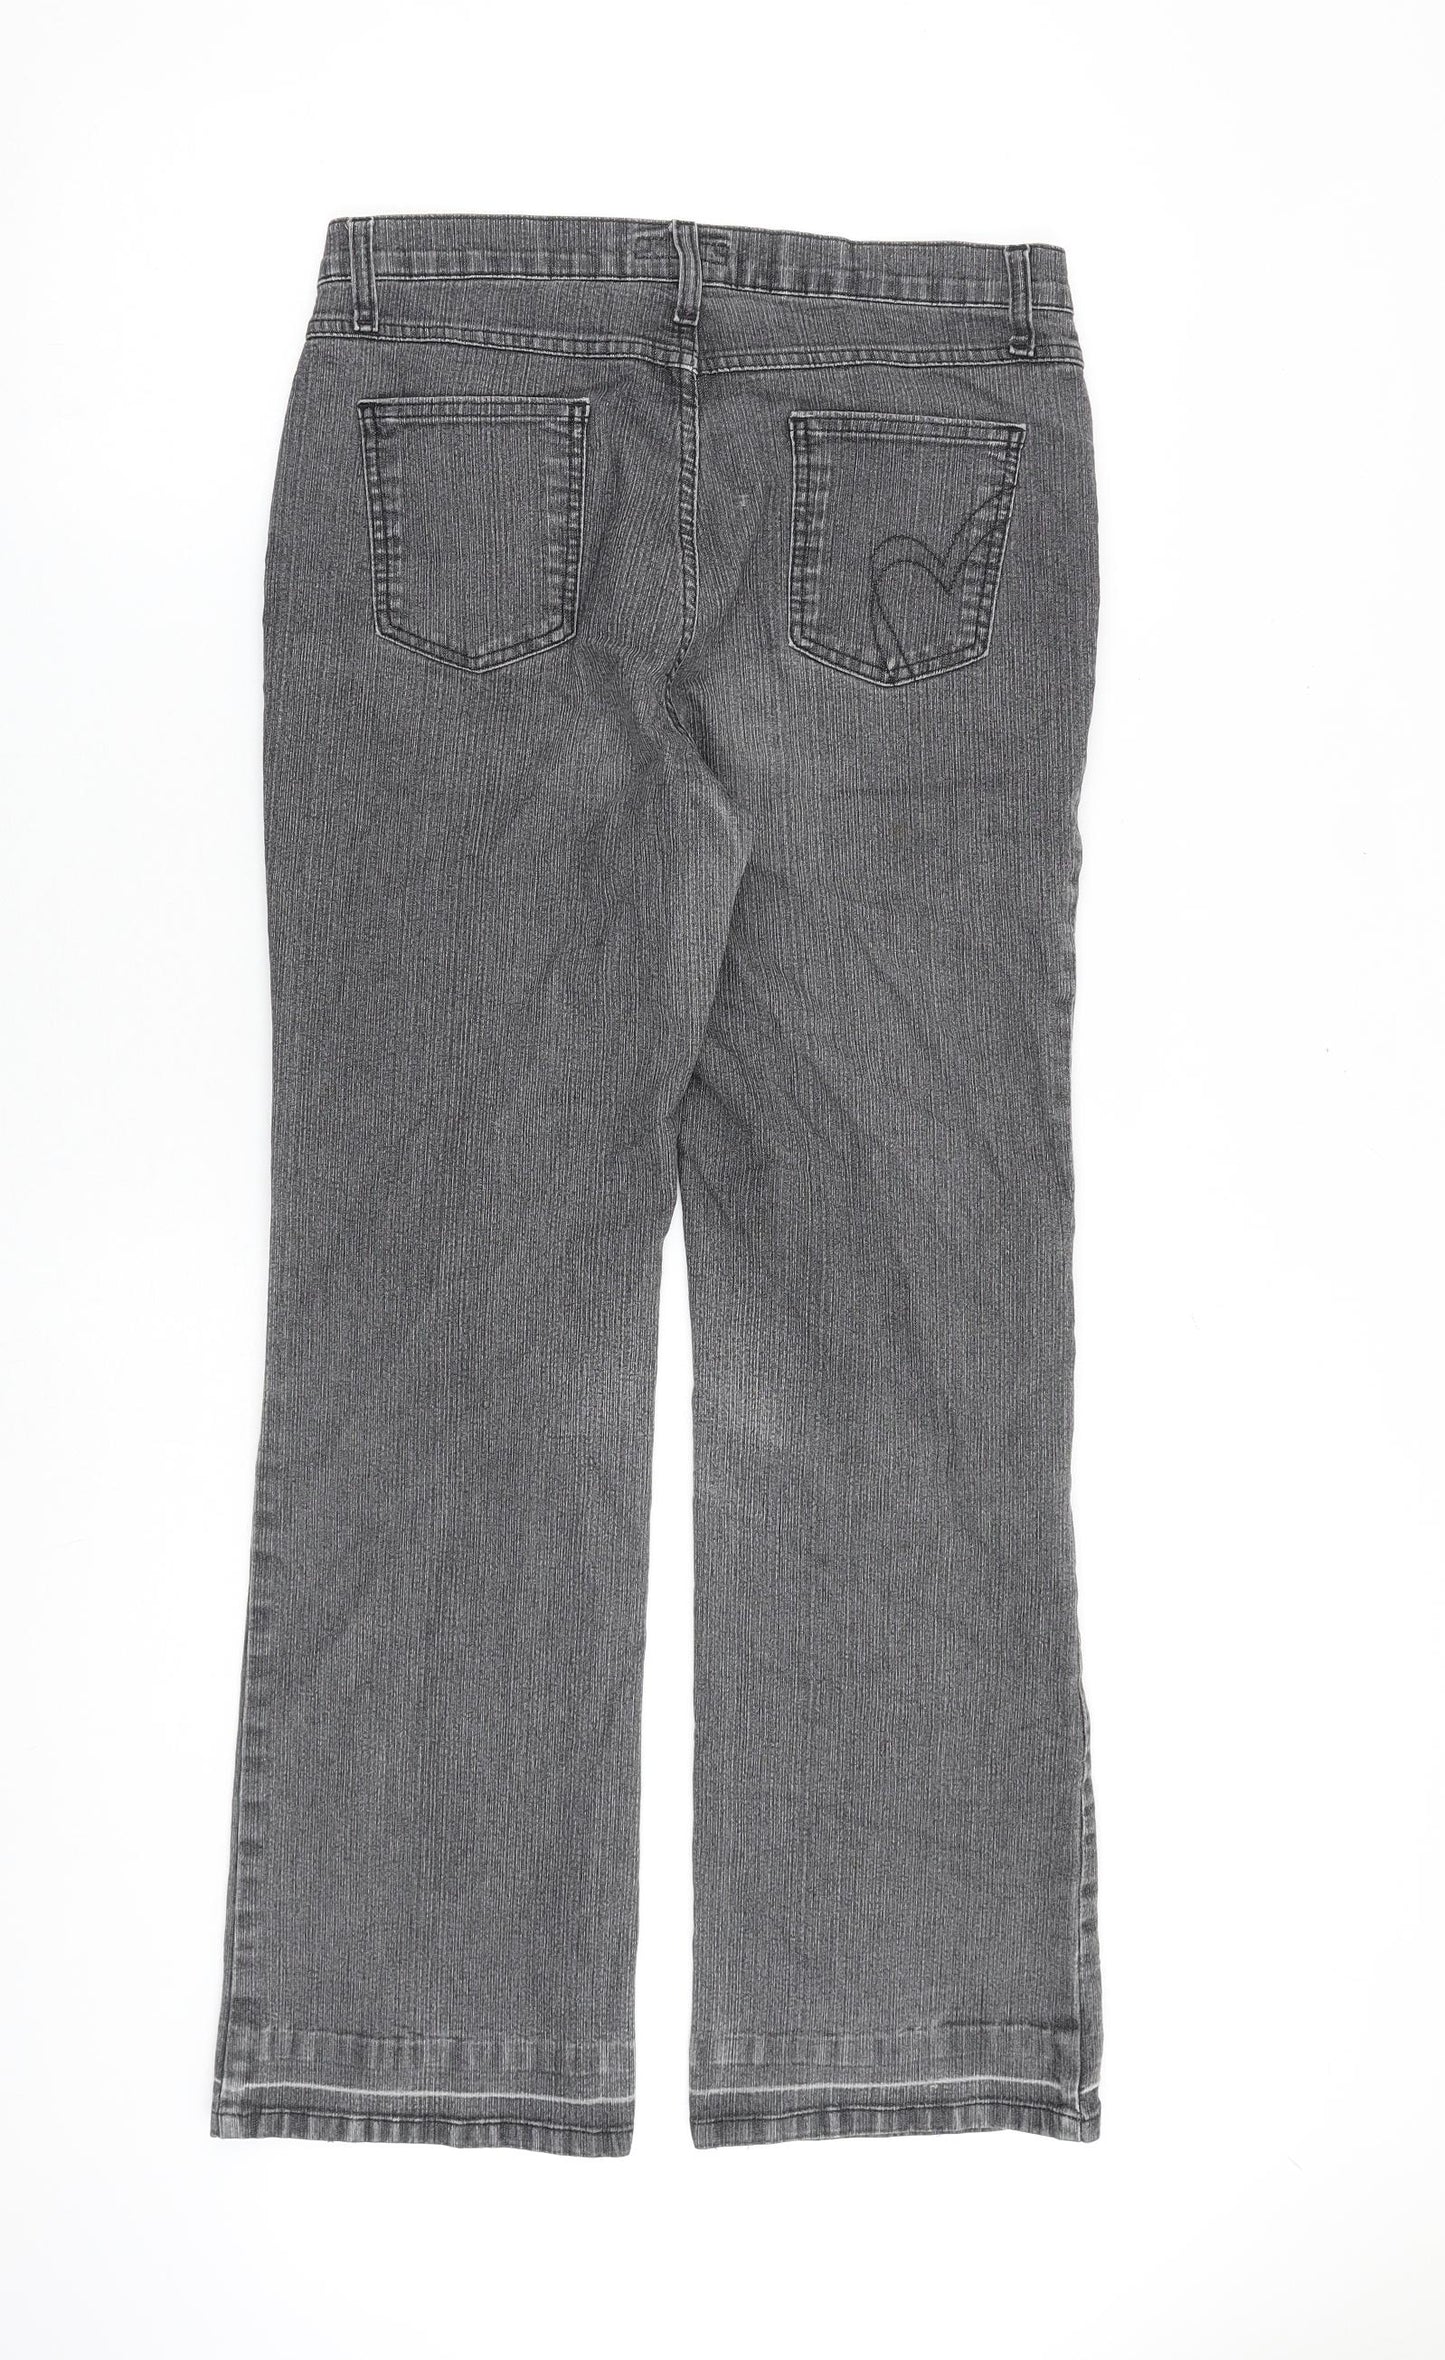 Per Una Womens Grey Cotton Wide-Leg Jeans Size 12 L30 in Regular Zip